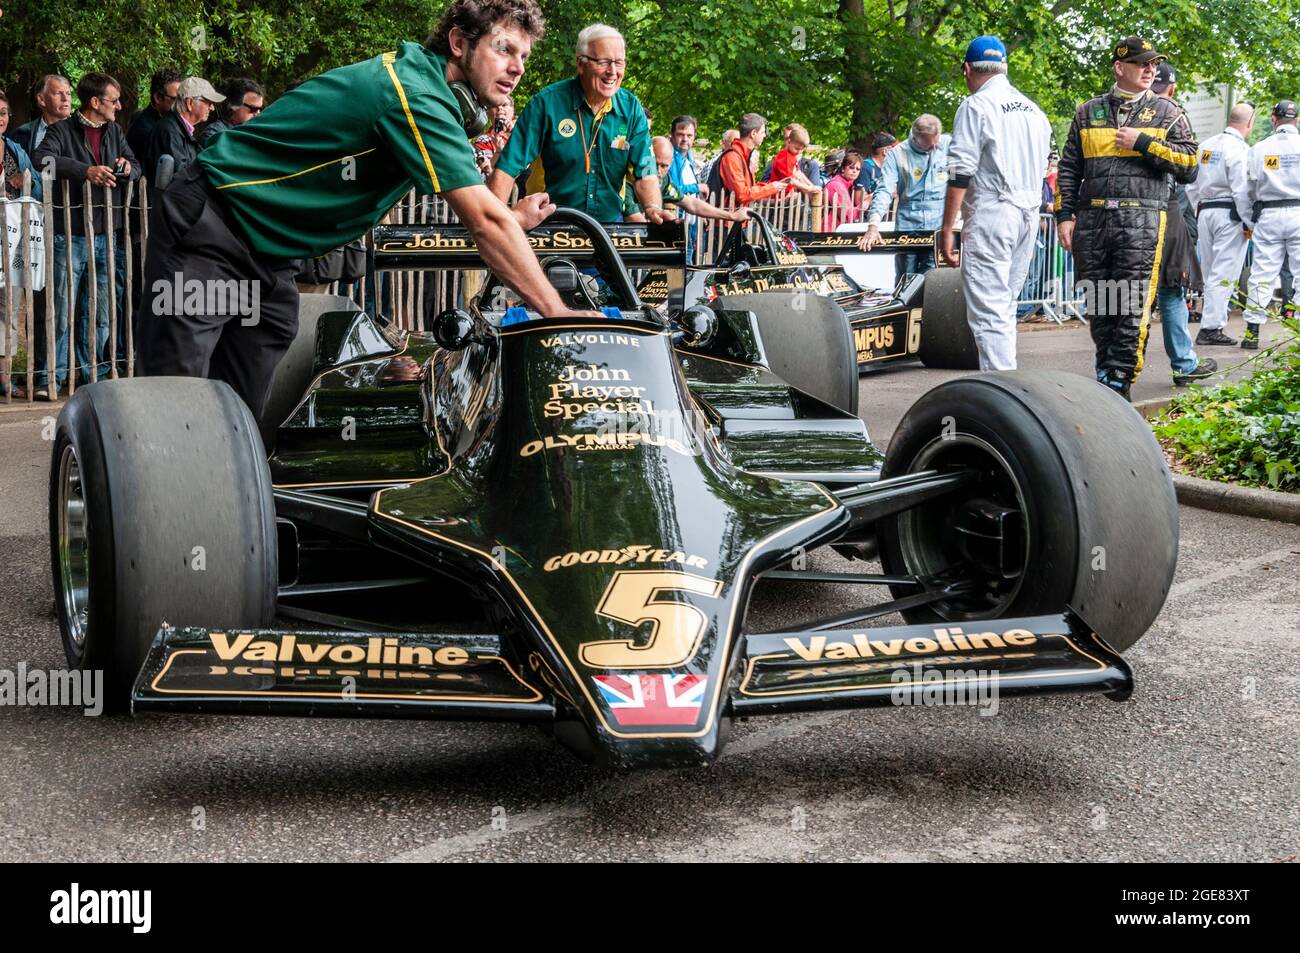 Classic Lotus 79 Formula 1, Grand Prix racing car at the Goodwood Festival of Speed motor racing event 2014. Classic Team Lotus crew pushing car Stock Photo